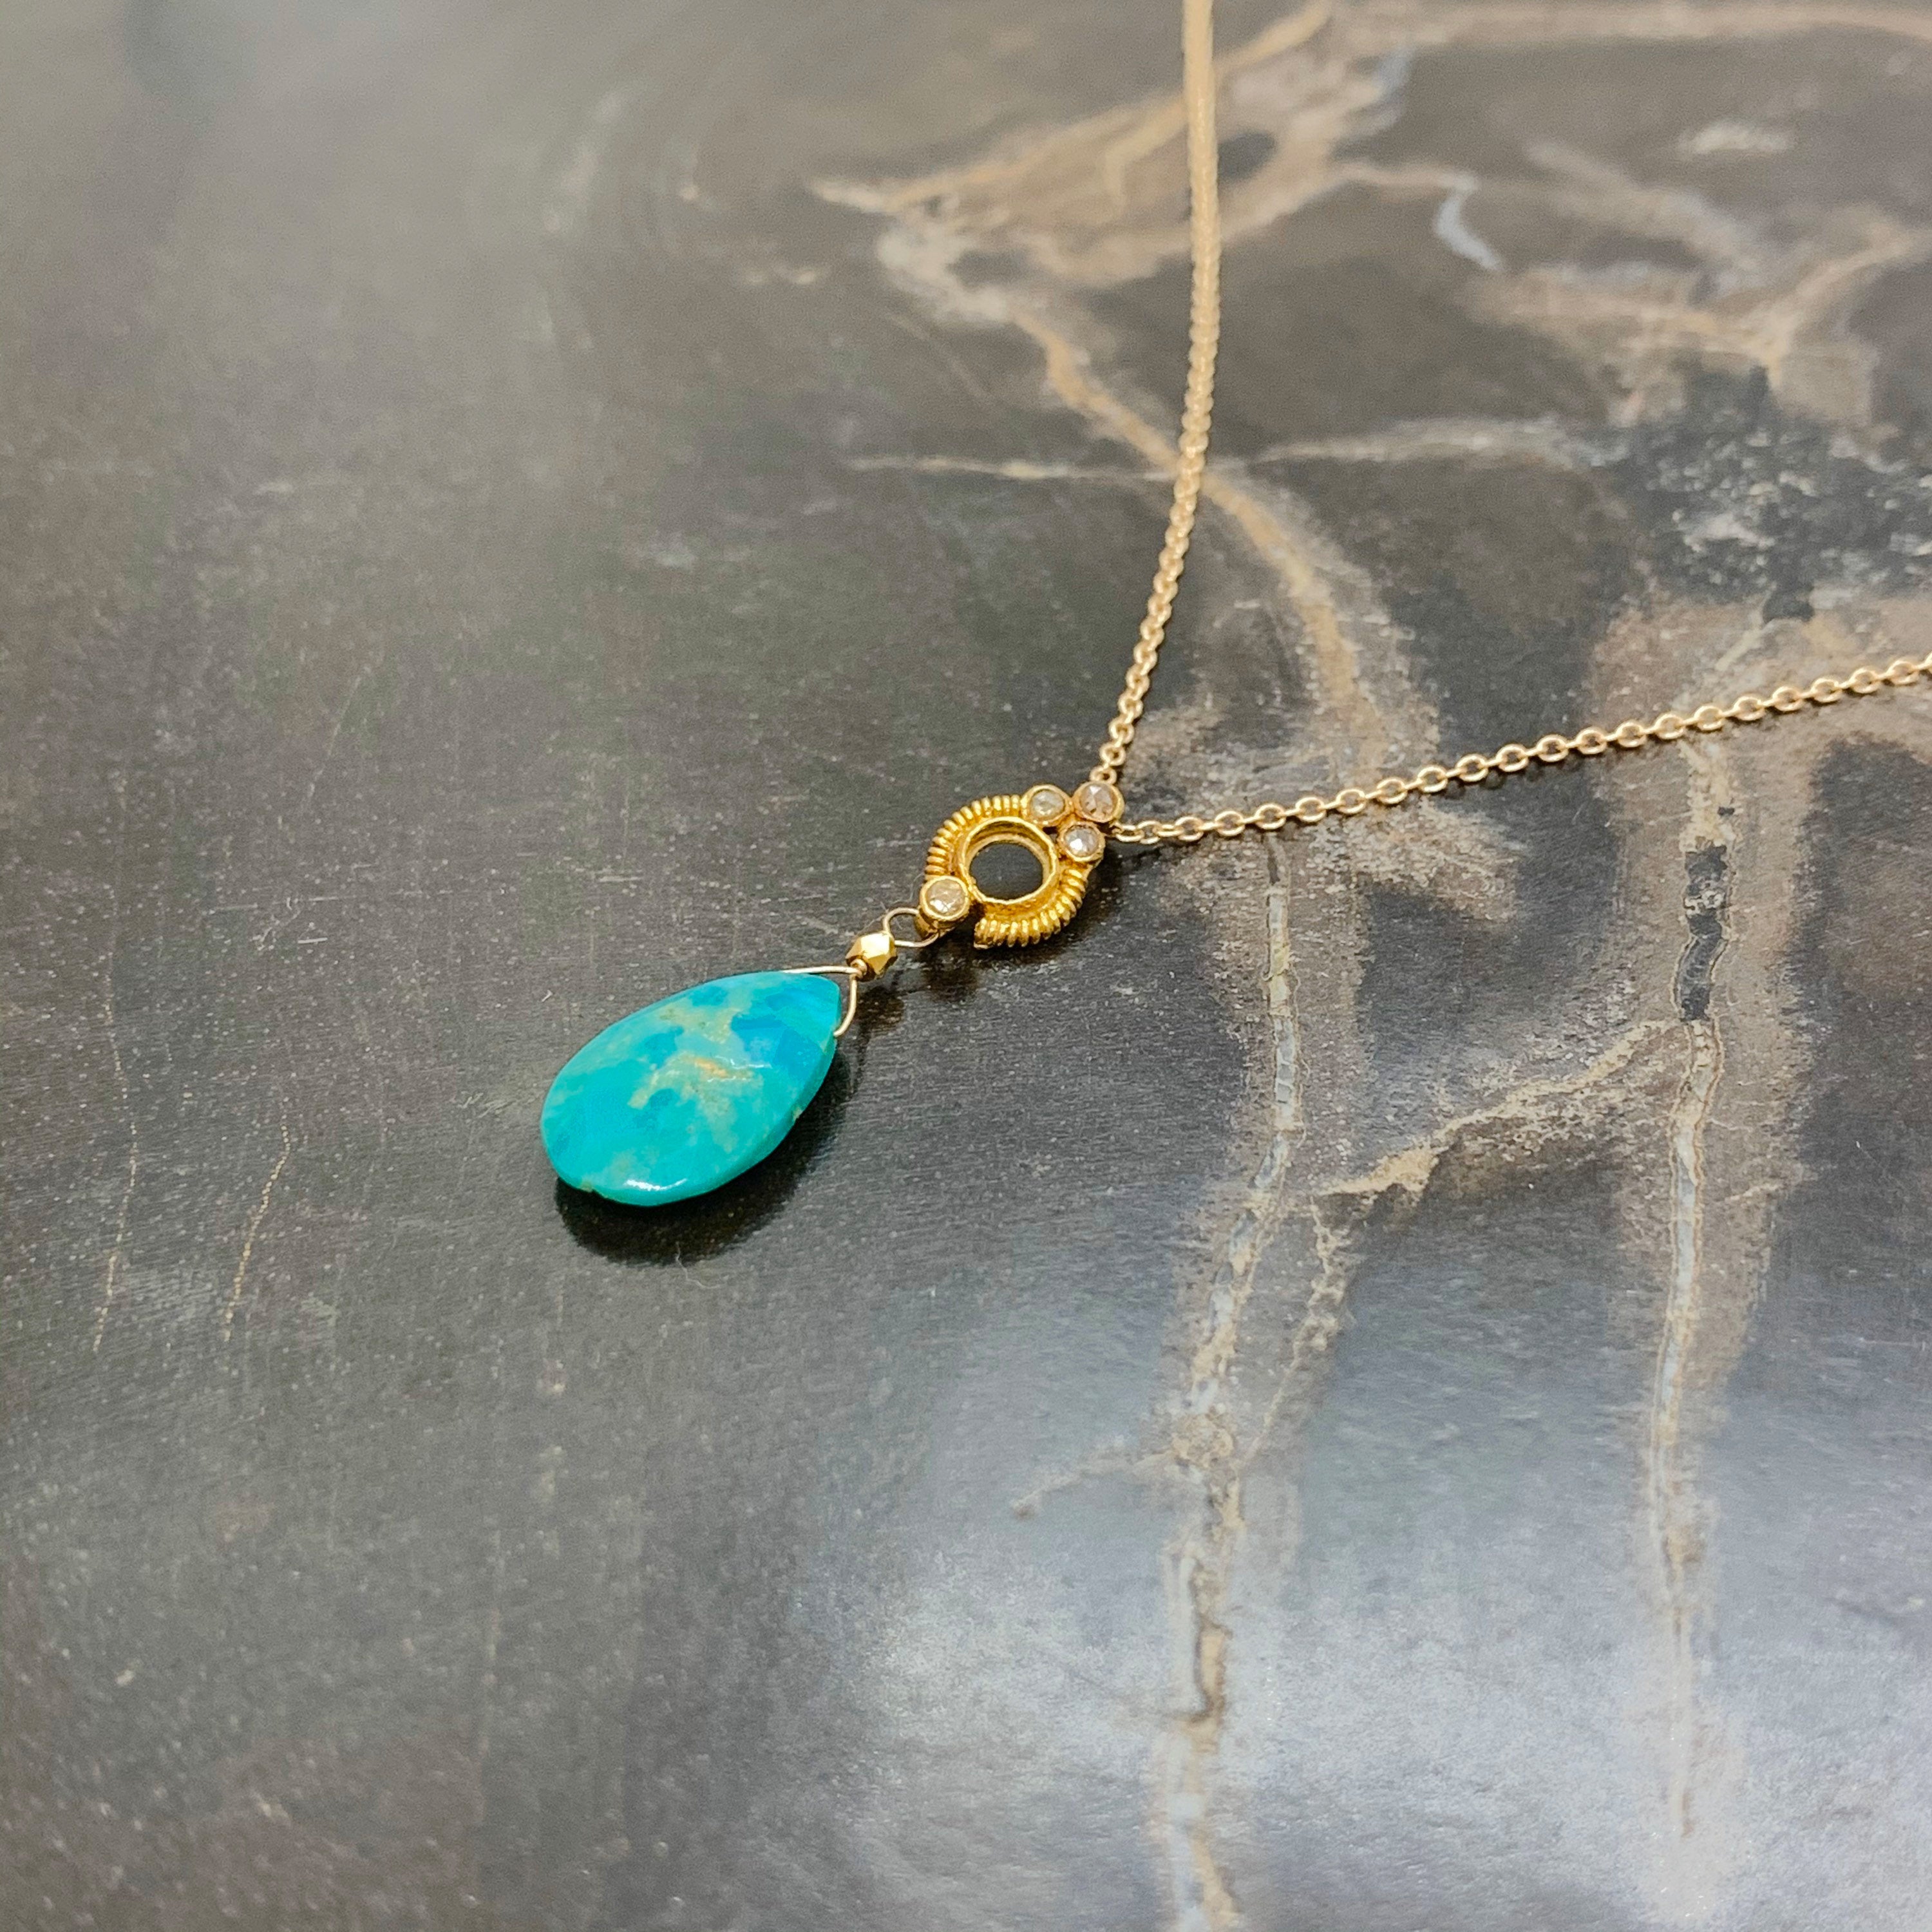 14k Gold Chain Necklace w/ 18k Gold Diamond Pendant & Amazonite Drop